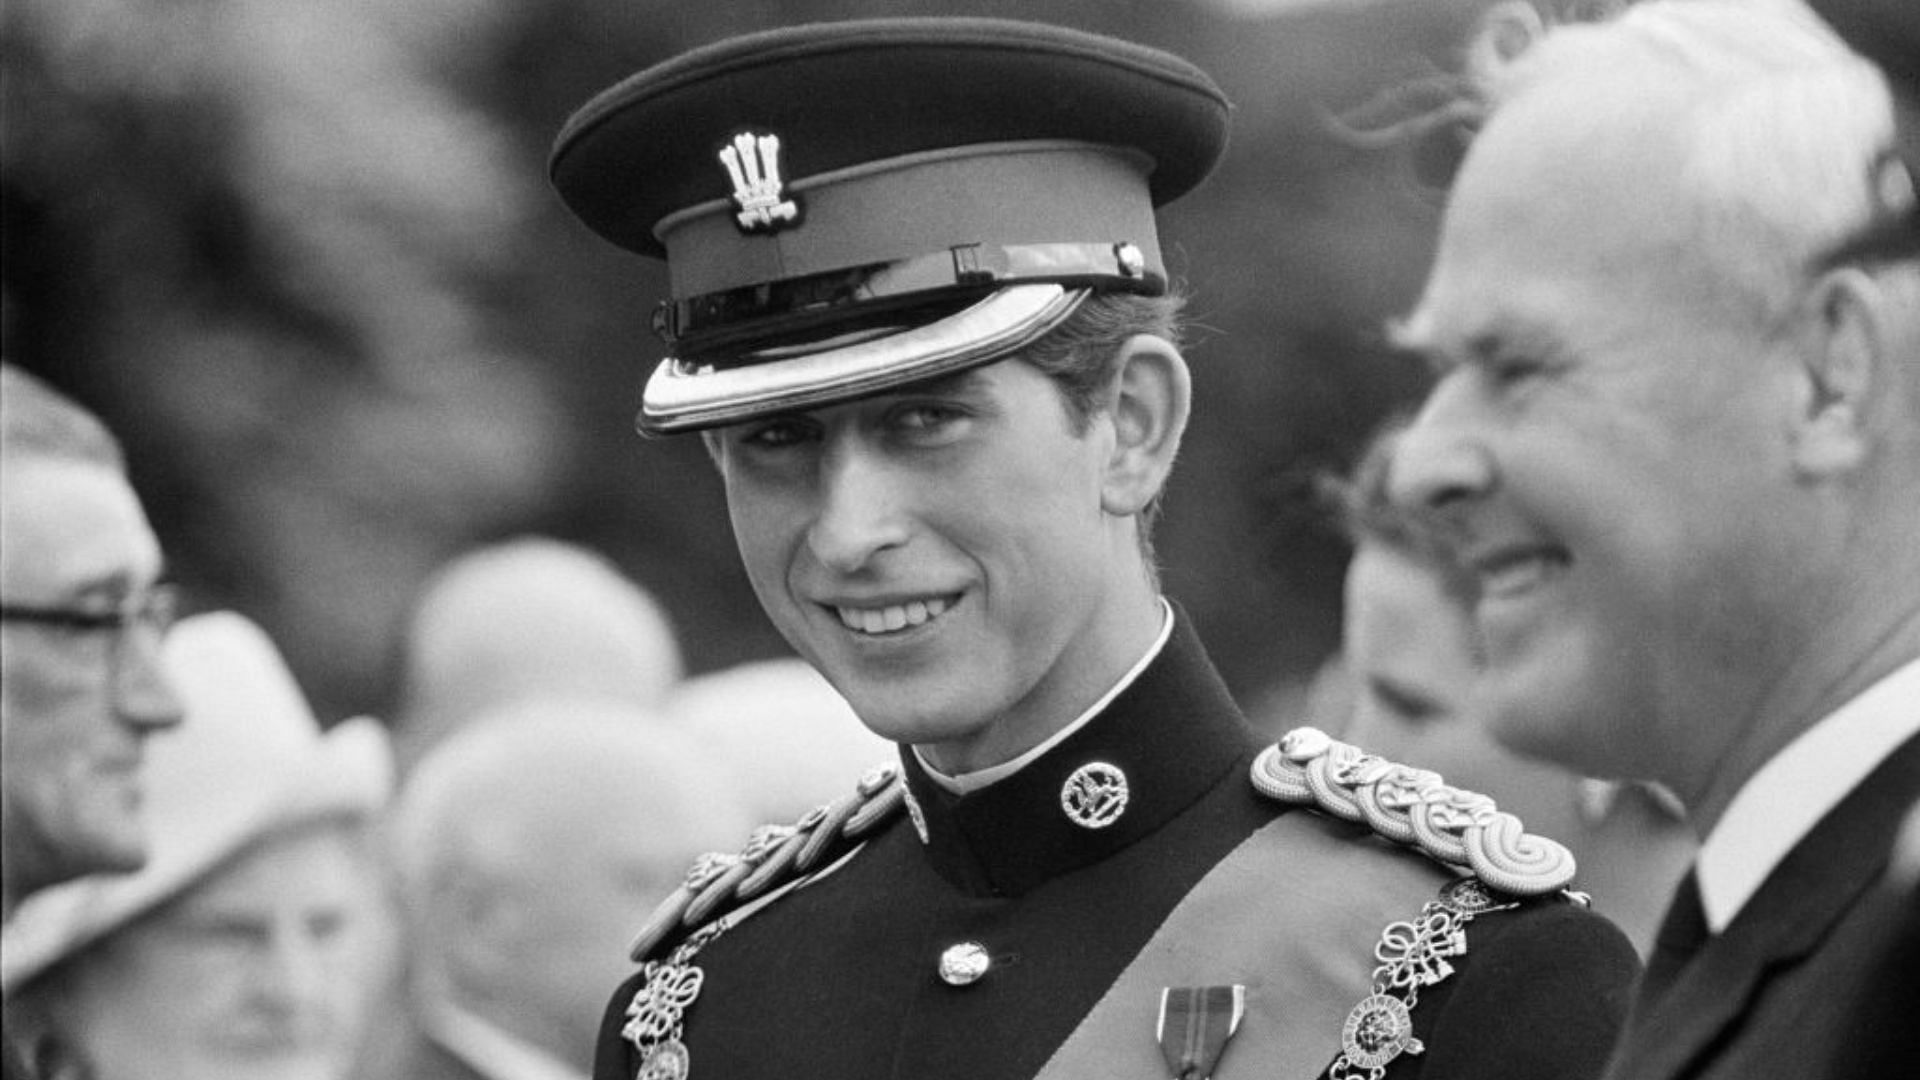 Prince of Wales (Image via HistoryExtra)